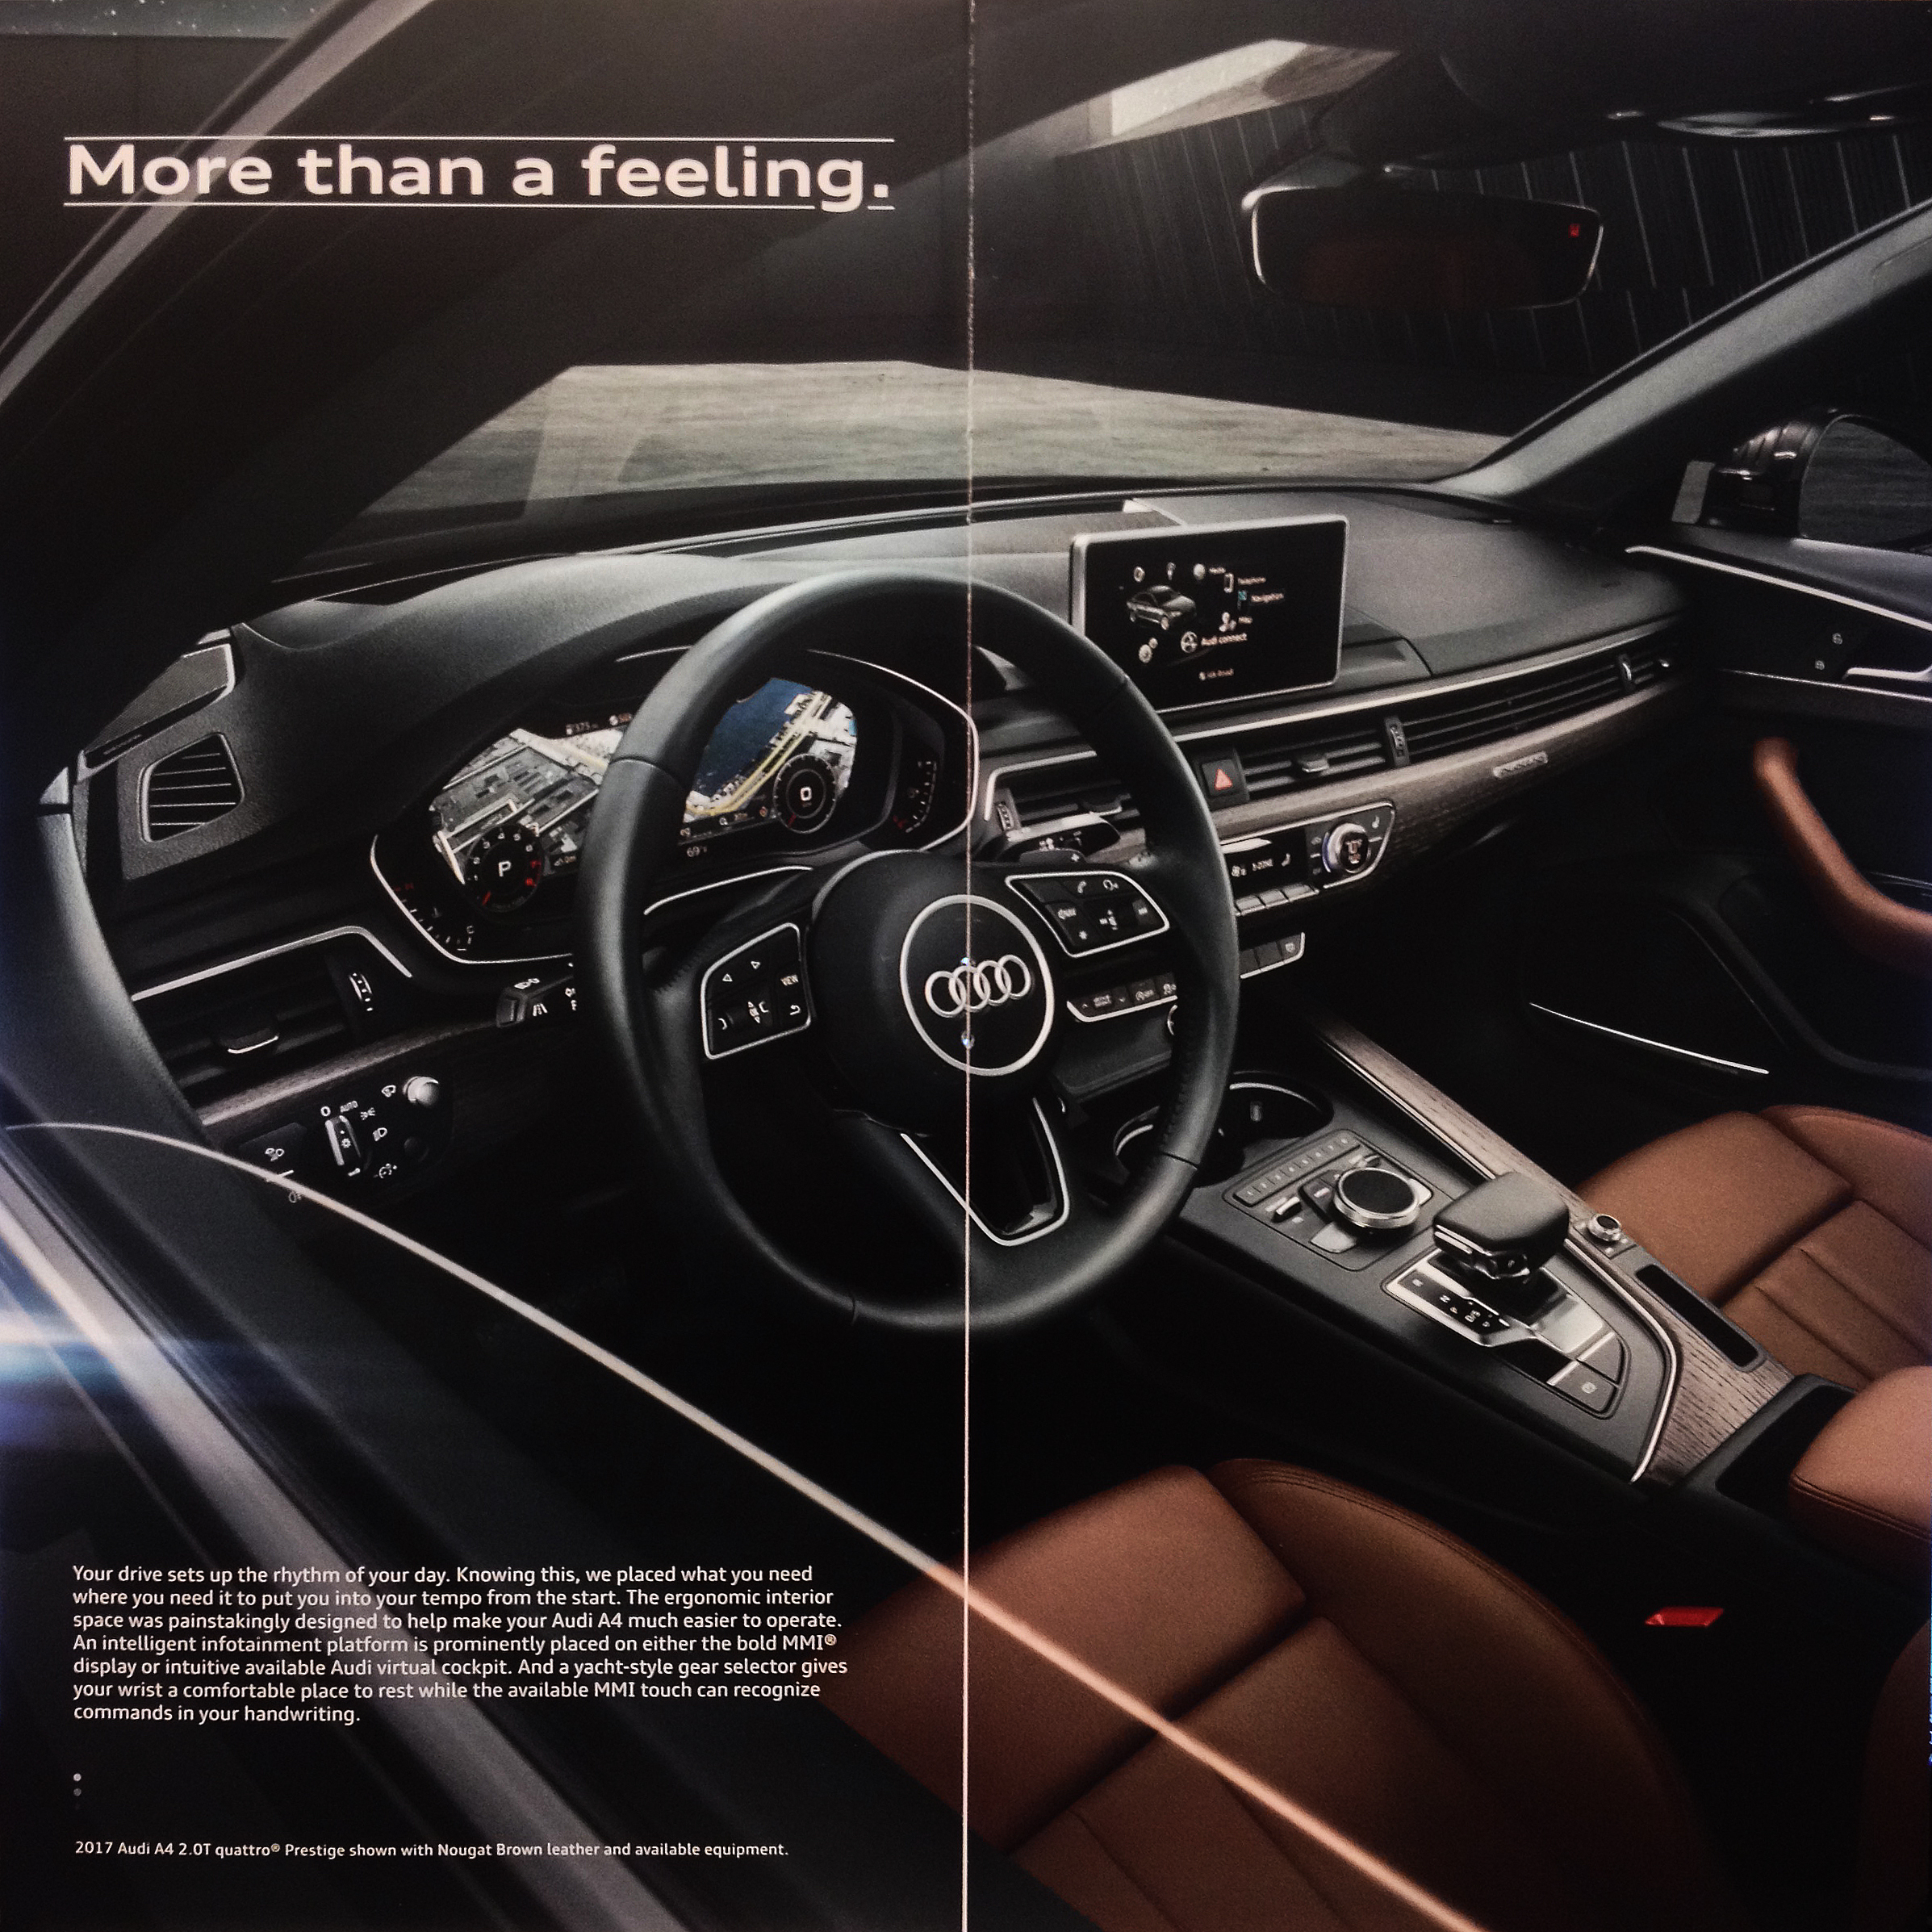 Audi Advertising - 2017 Audi A4 Print Ad - More than feeling.